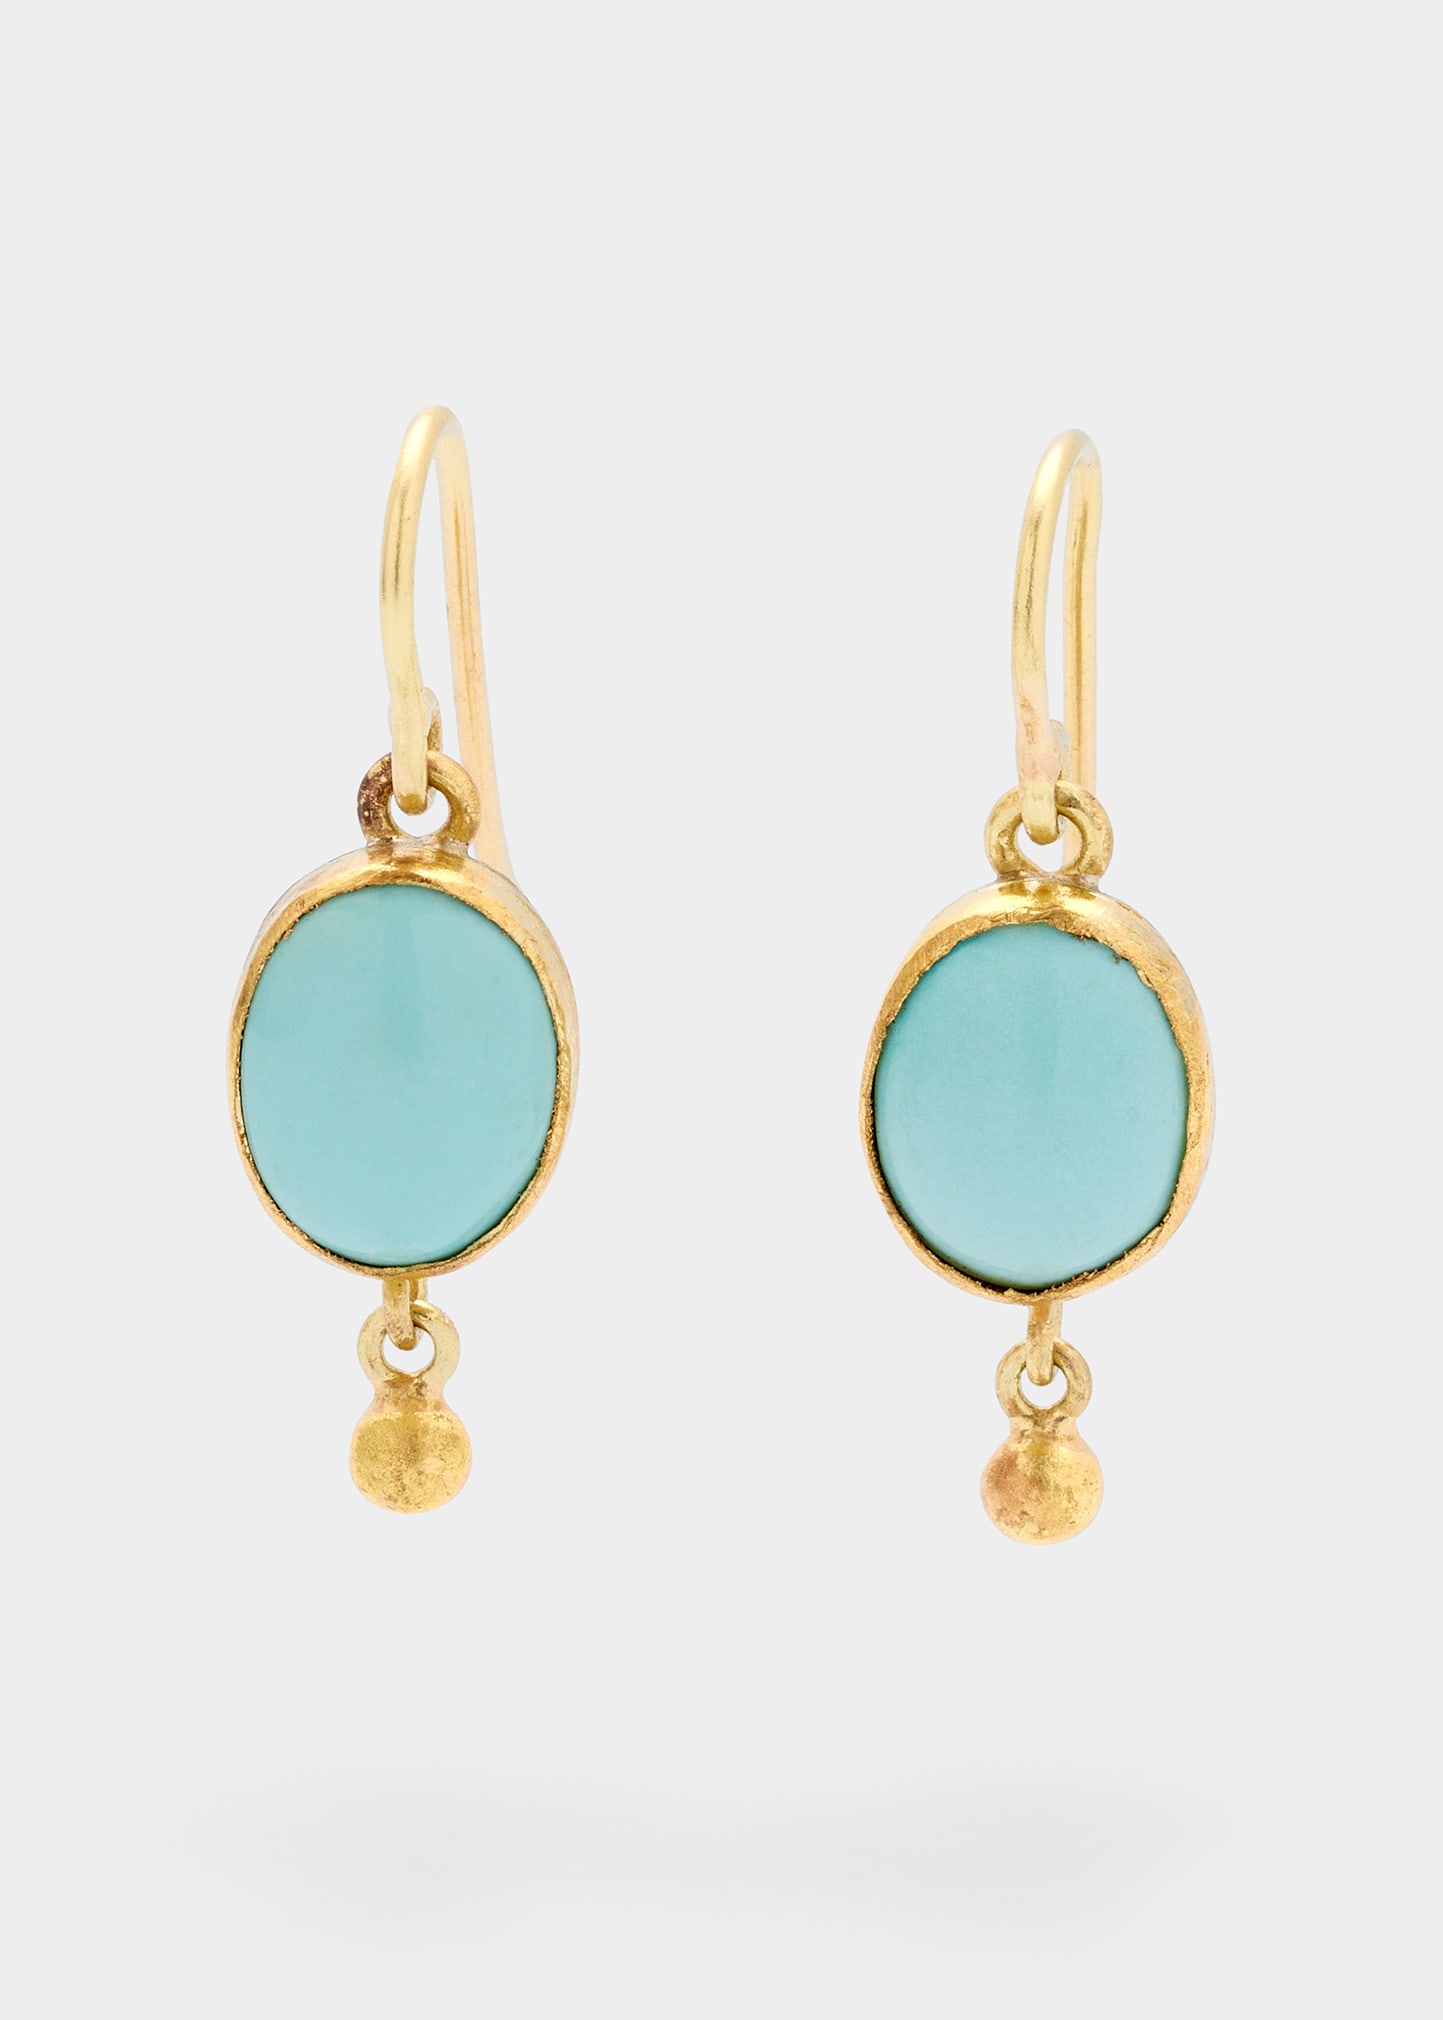 JUDY GEIB Persian Turquoise Single Drop Earrings in 22K Gold